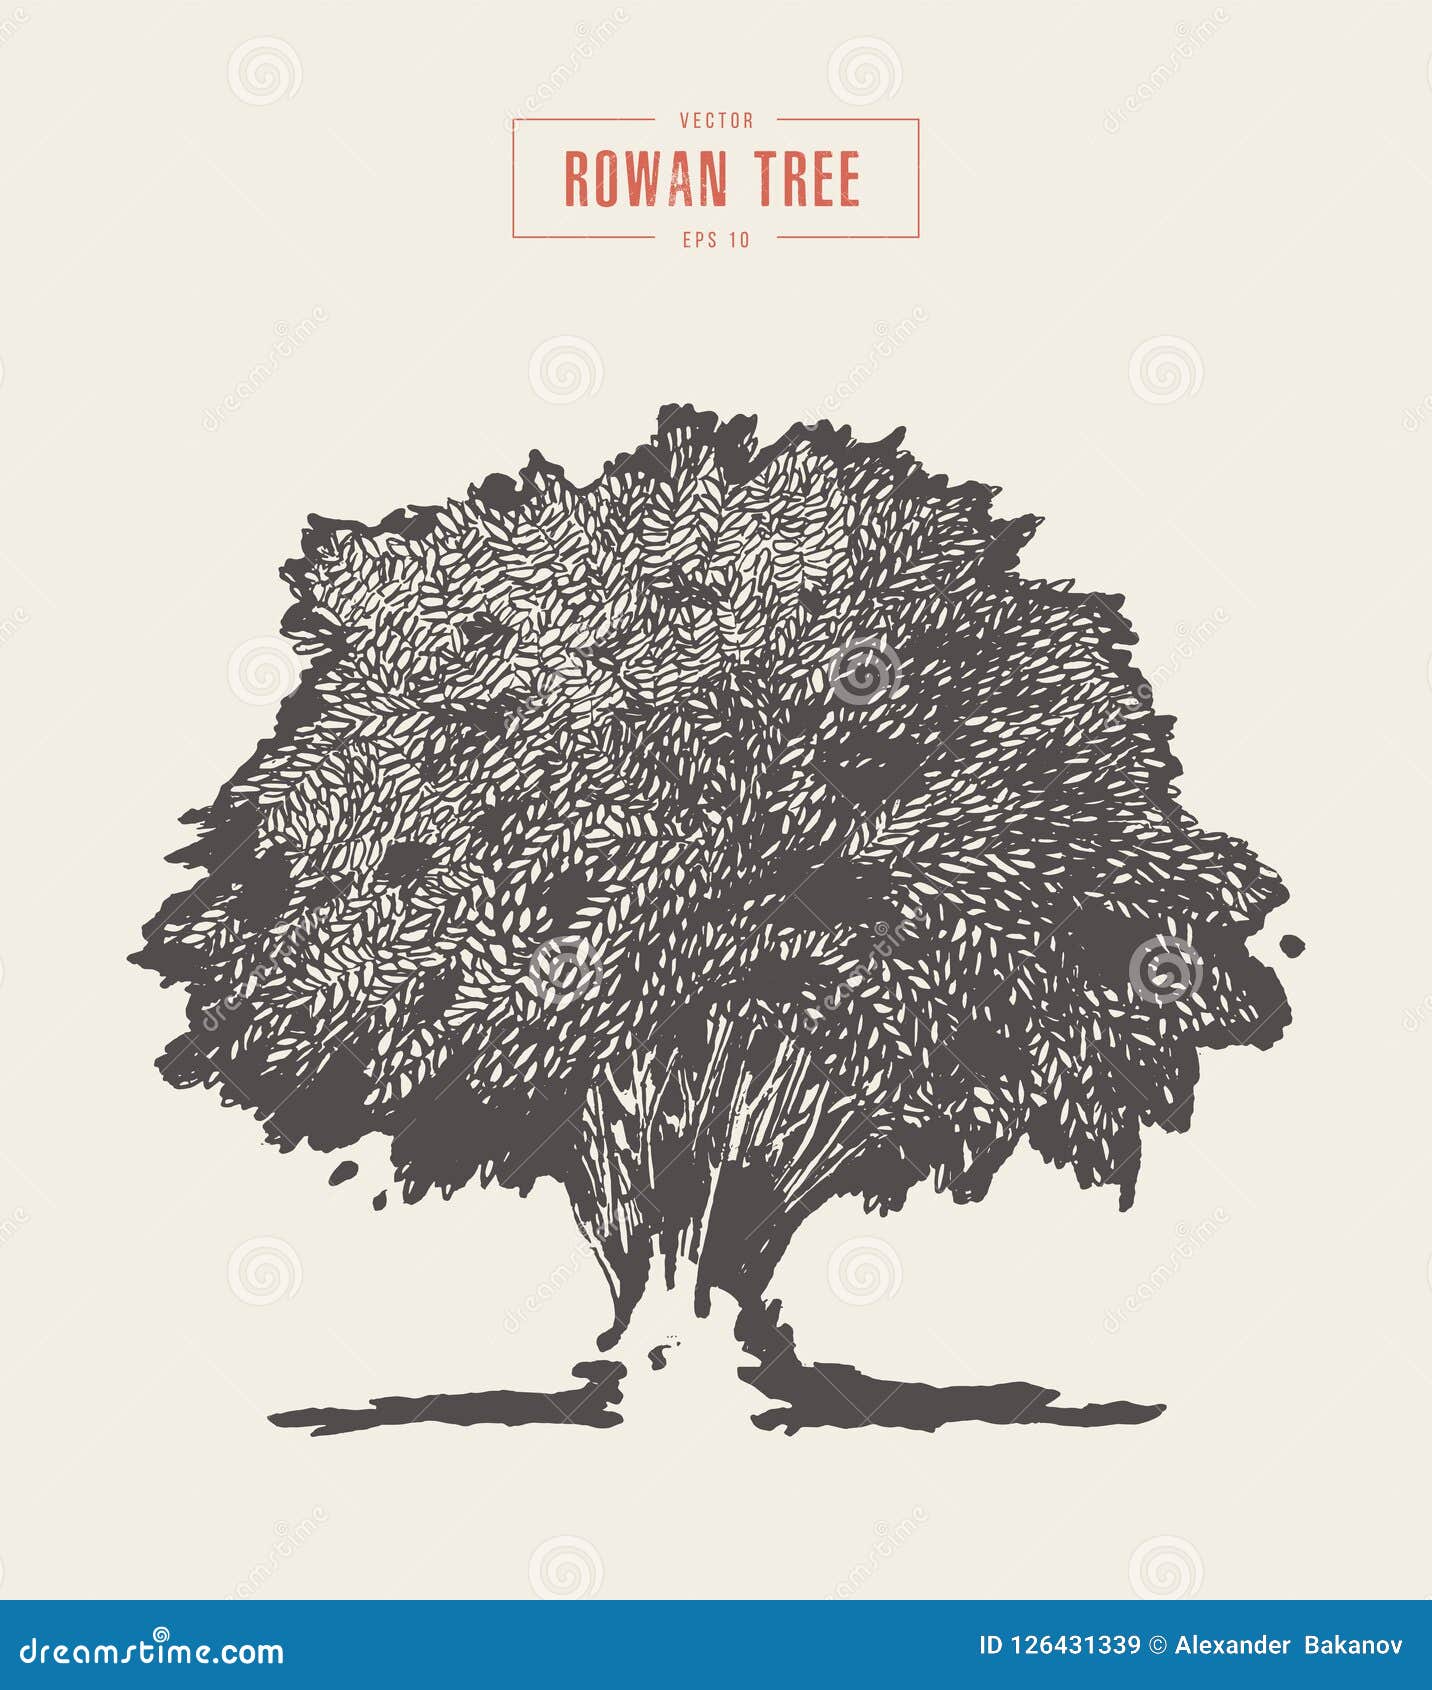 high detail vintage rowan tree, hand drawn, 